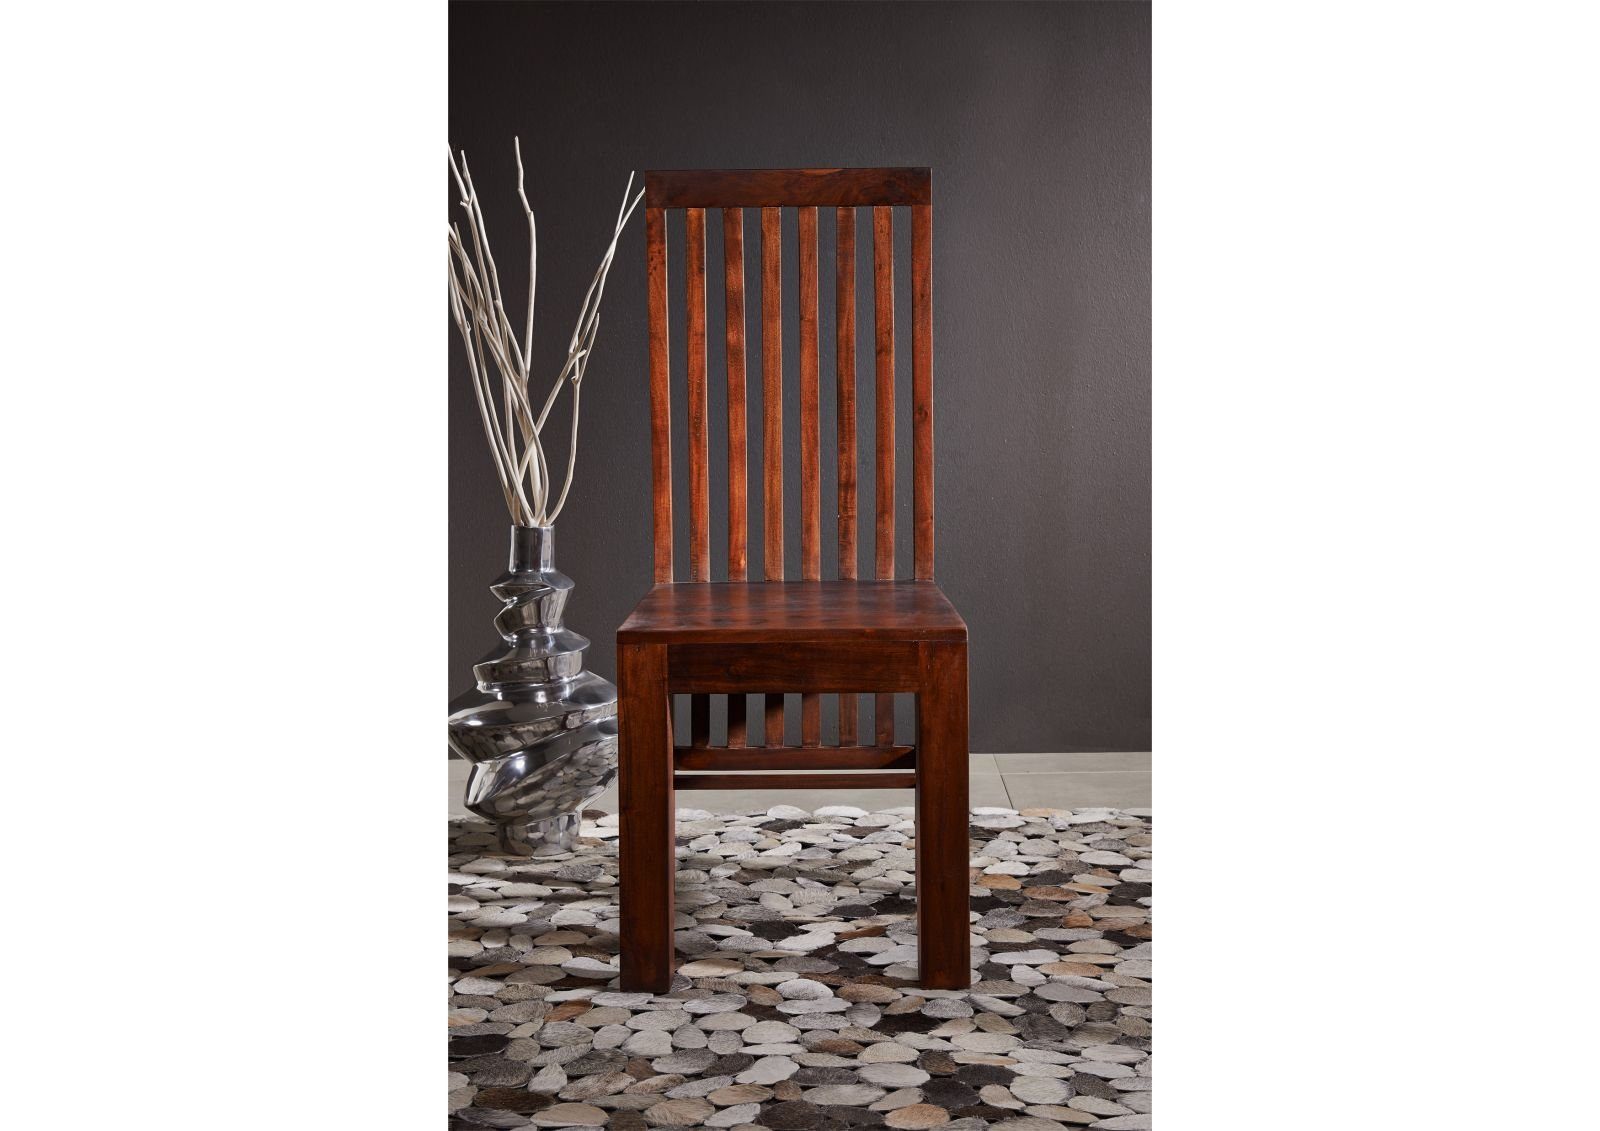 #26 Holzstuhl Stuhl nougat Akazie OXFORD Massivmoebel24 lackiert 46x46x109 dunkelbraun